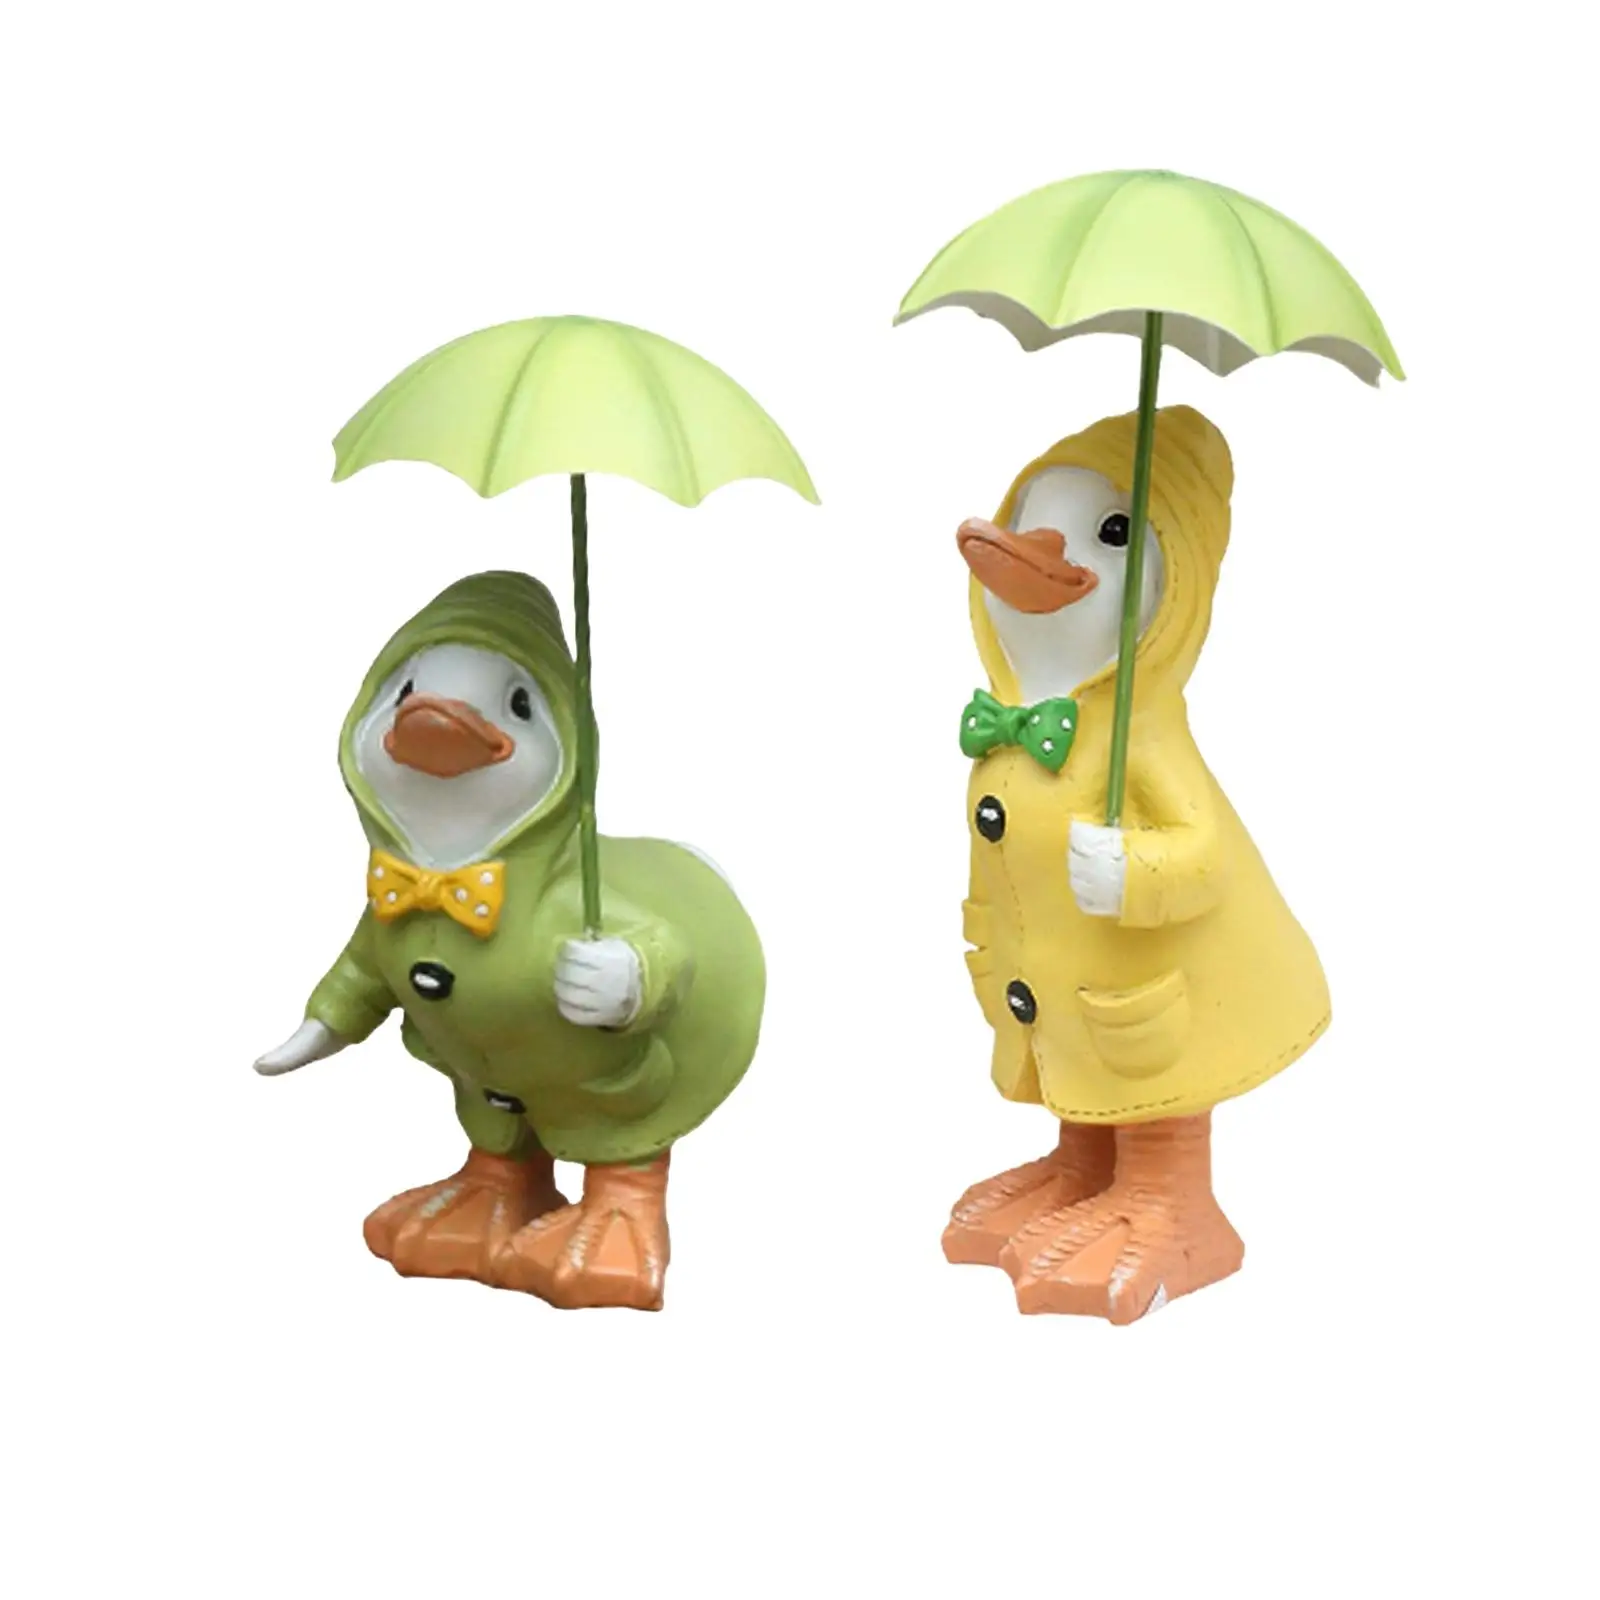 Garden Figurine Desktop Animal Ornament Crafts Raincoat Duck Statue Decor for Outdoor Indoor Home Backyard Yard Lawn